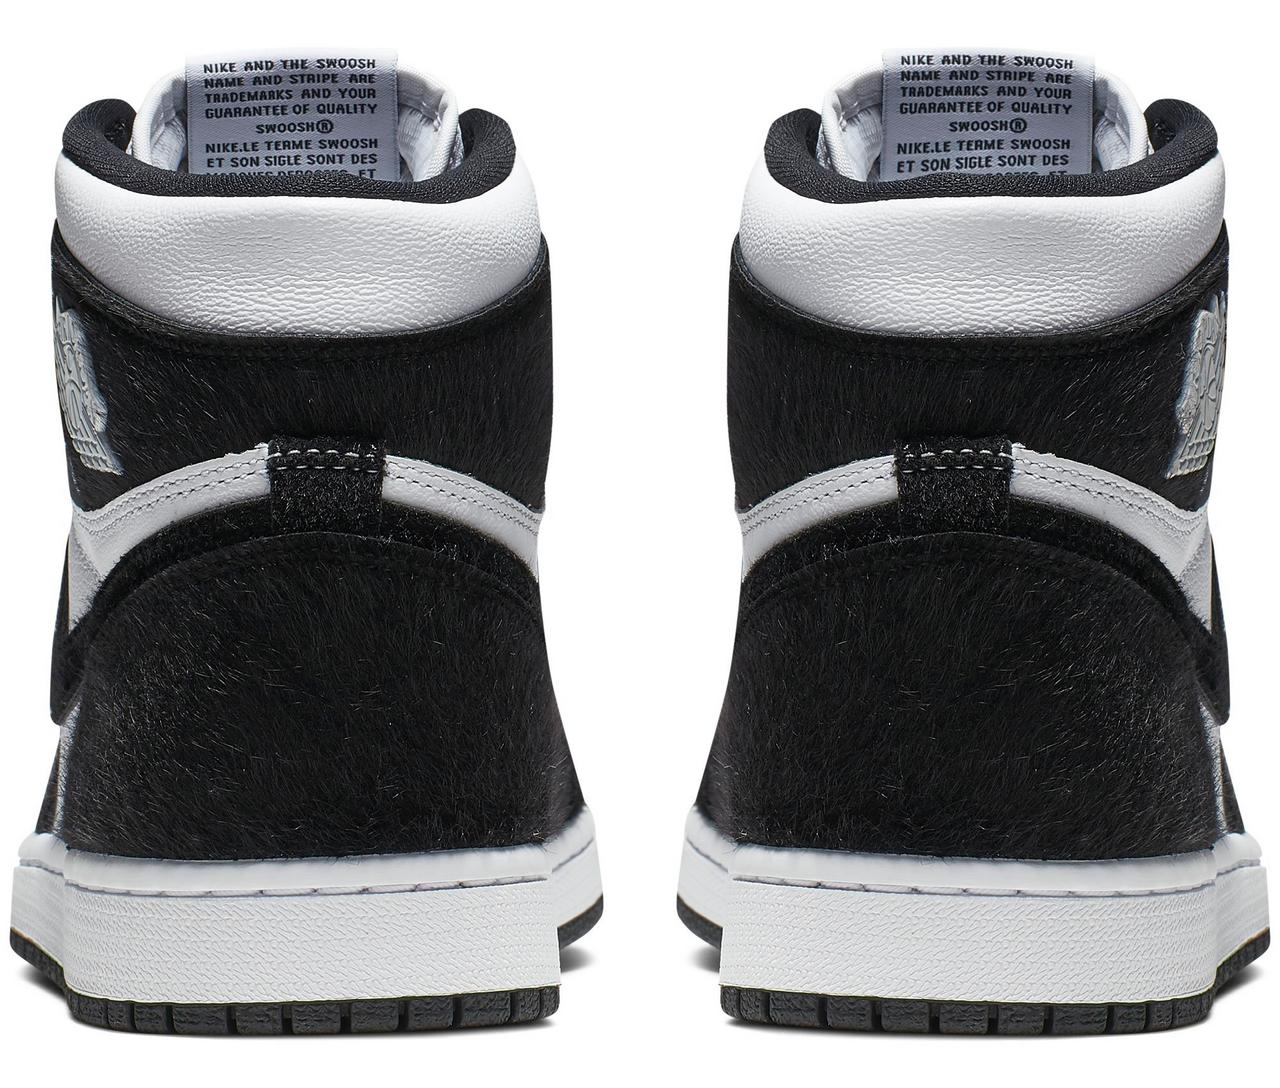 Sneaker Release: Air Jordan Retro 1 Twist “White/Black” Women’s ...